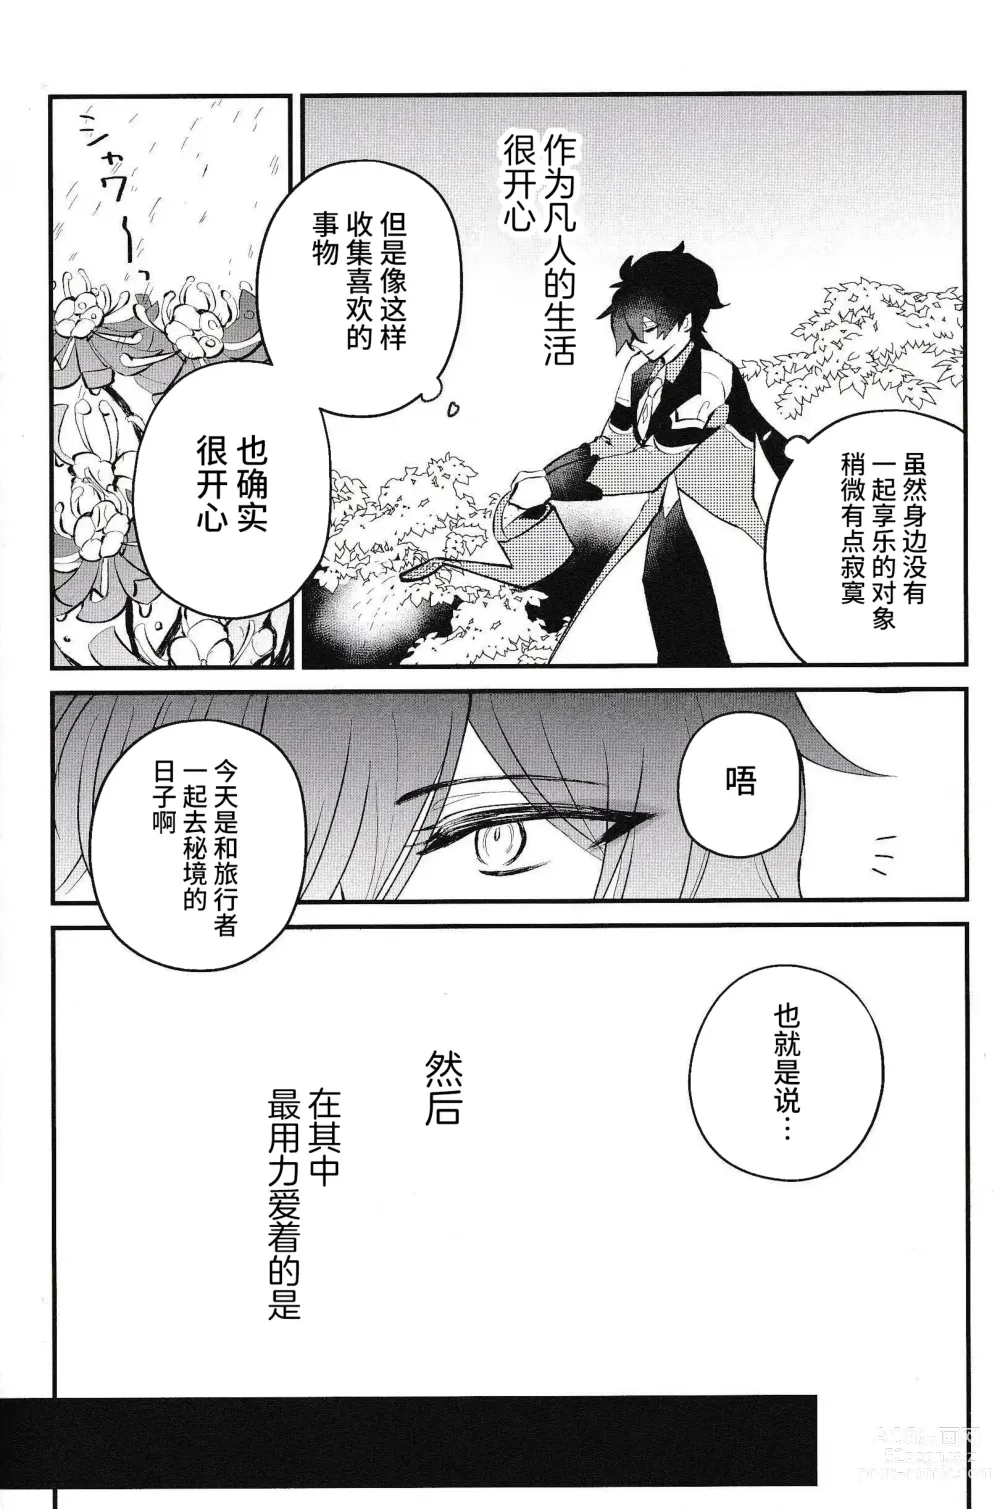 Page 4 of doujinshi Setsugetsuka Tomo ni - share a snow, moon, and flowers